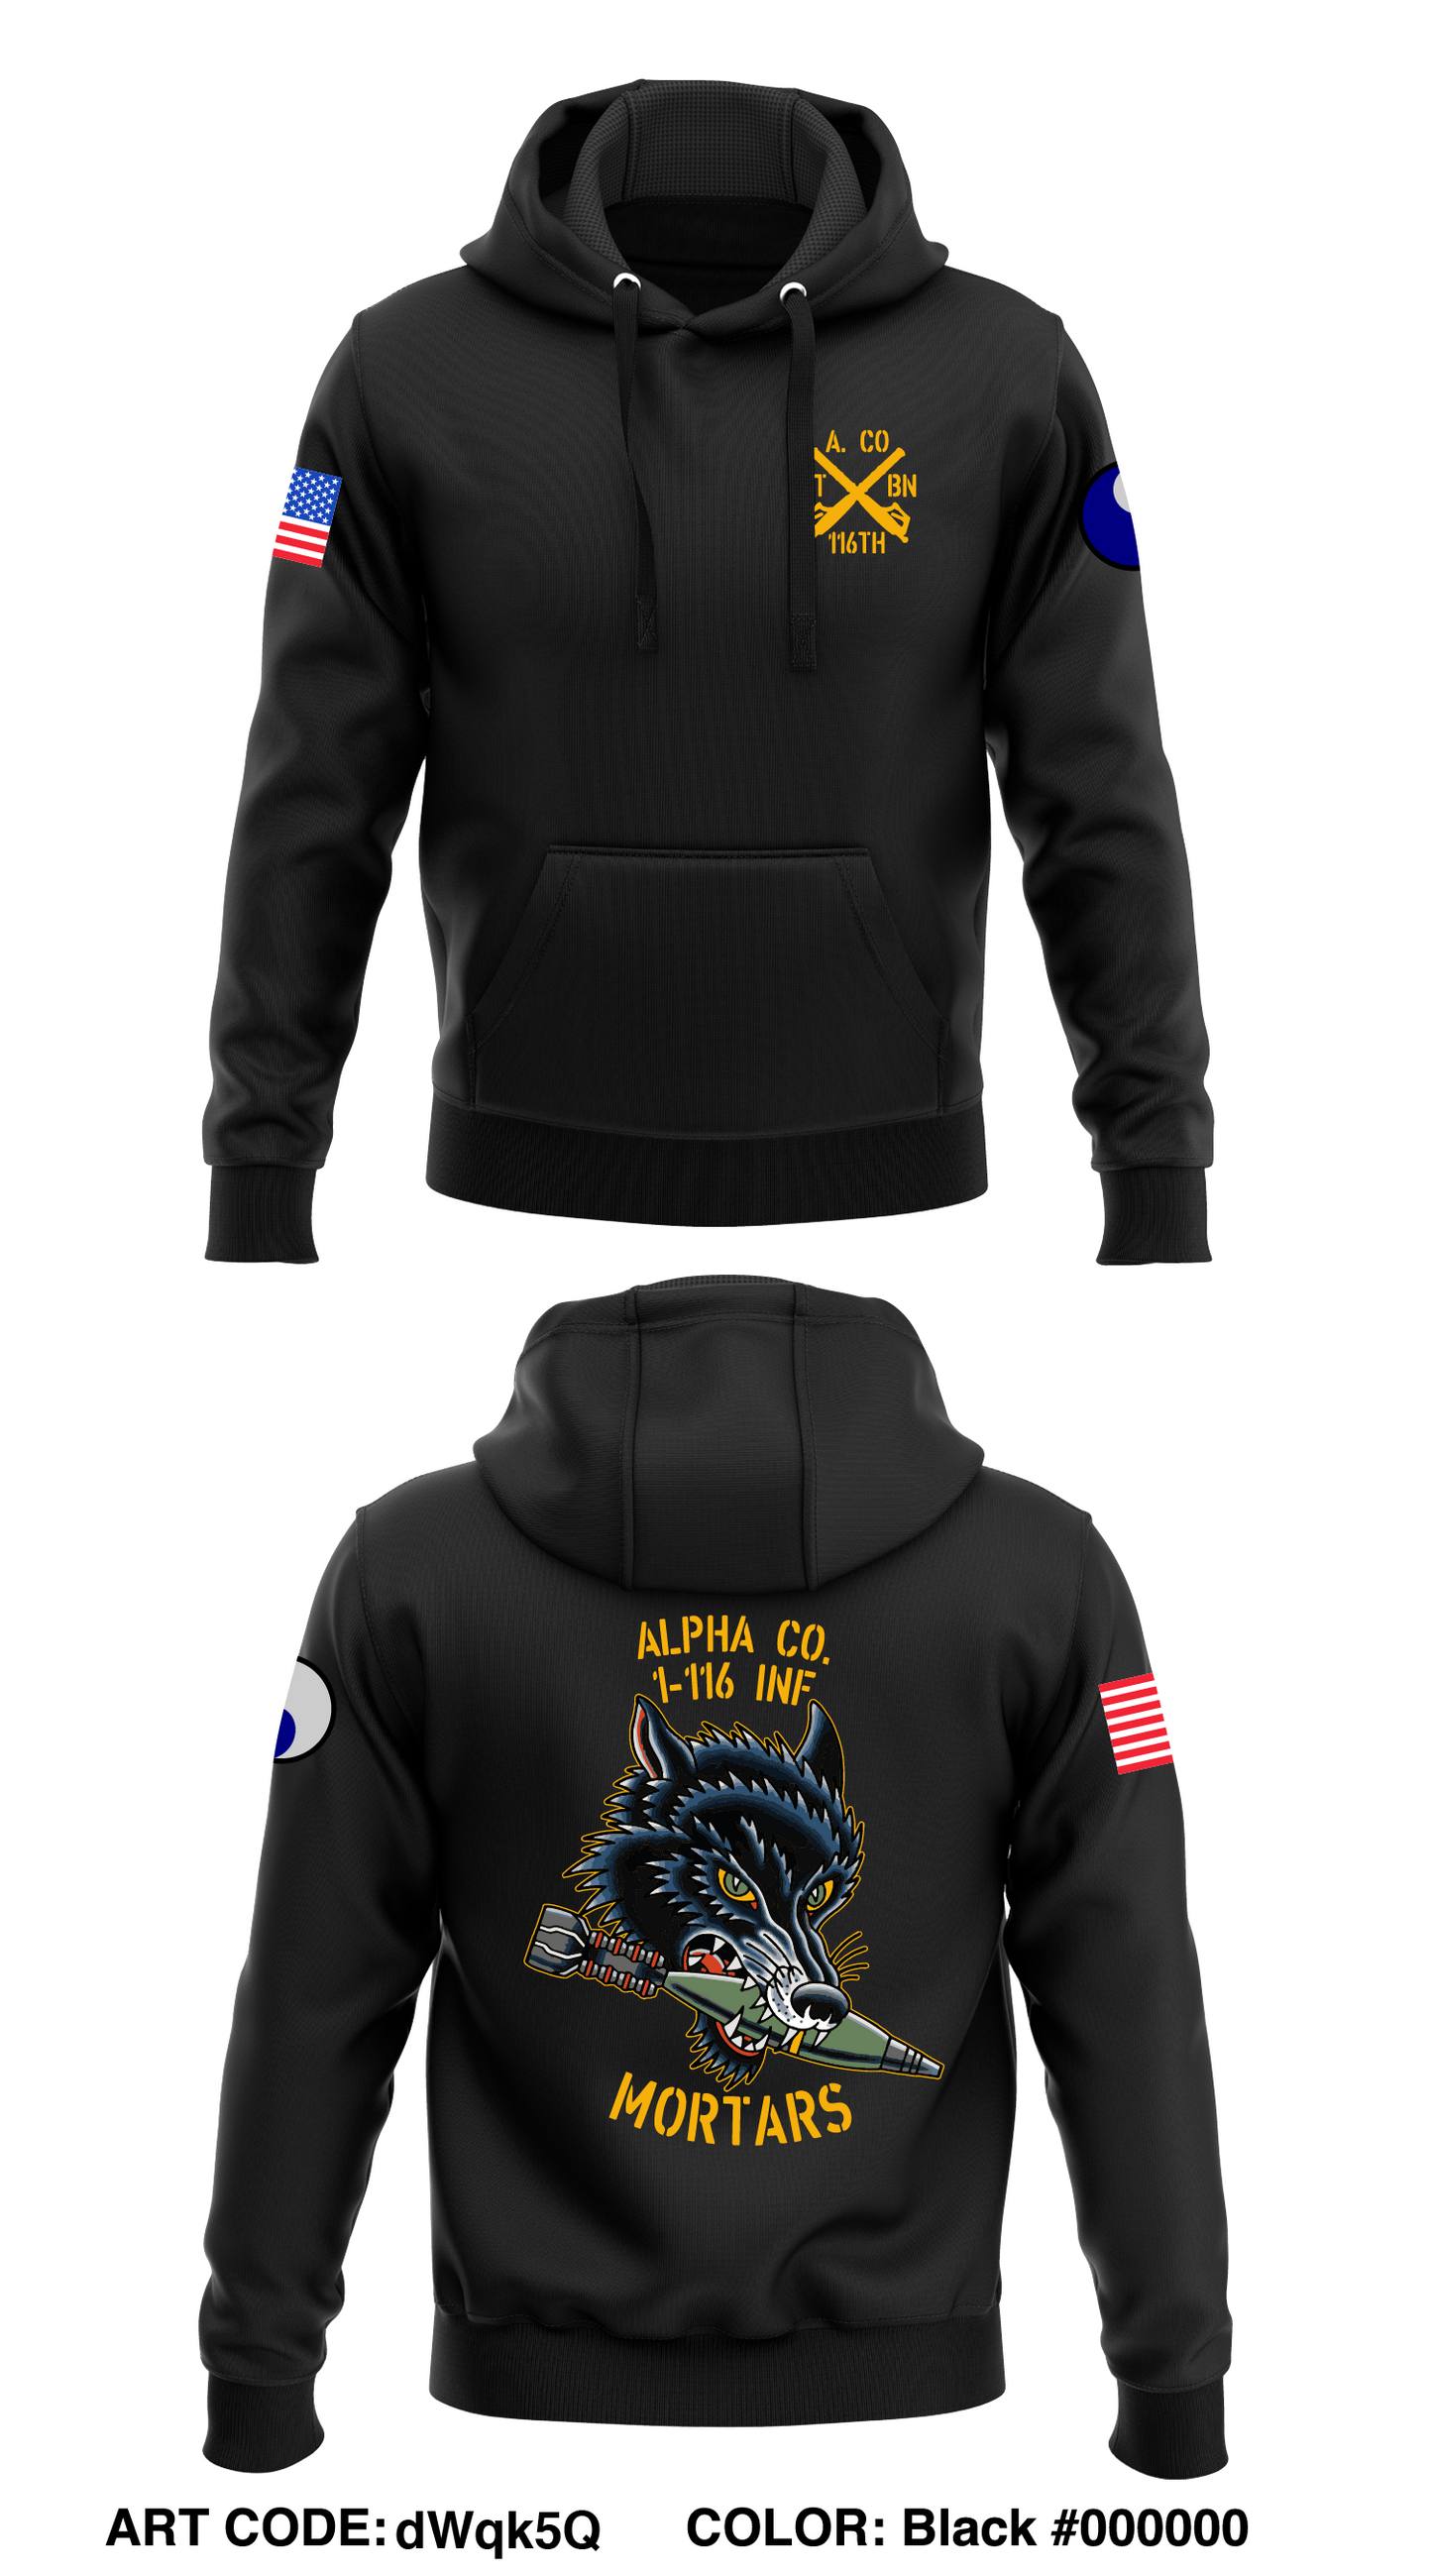 Alpha Company 1-116 INF, Mortars Section Store 1  Core Men's Hooded Performance Sweatshirt - dWqk5Q